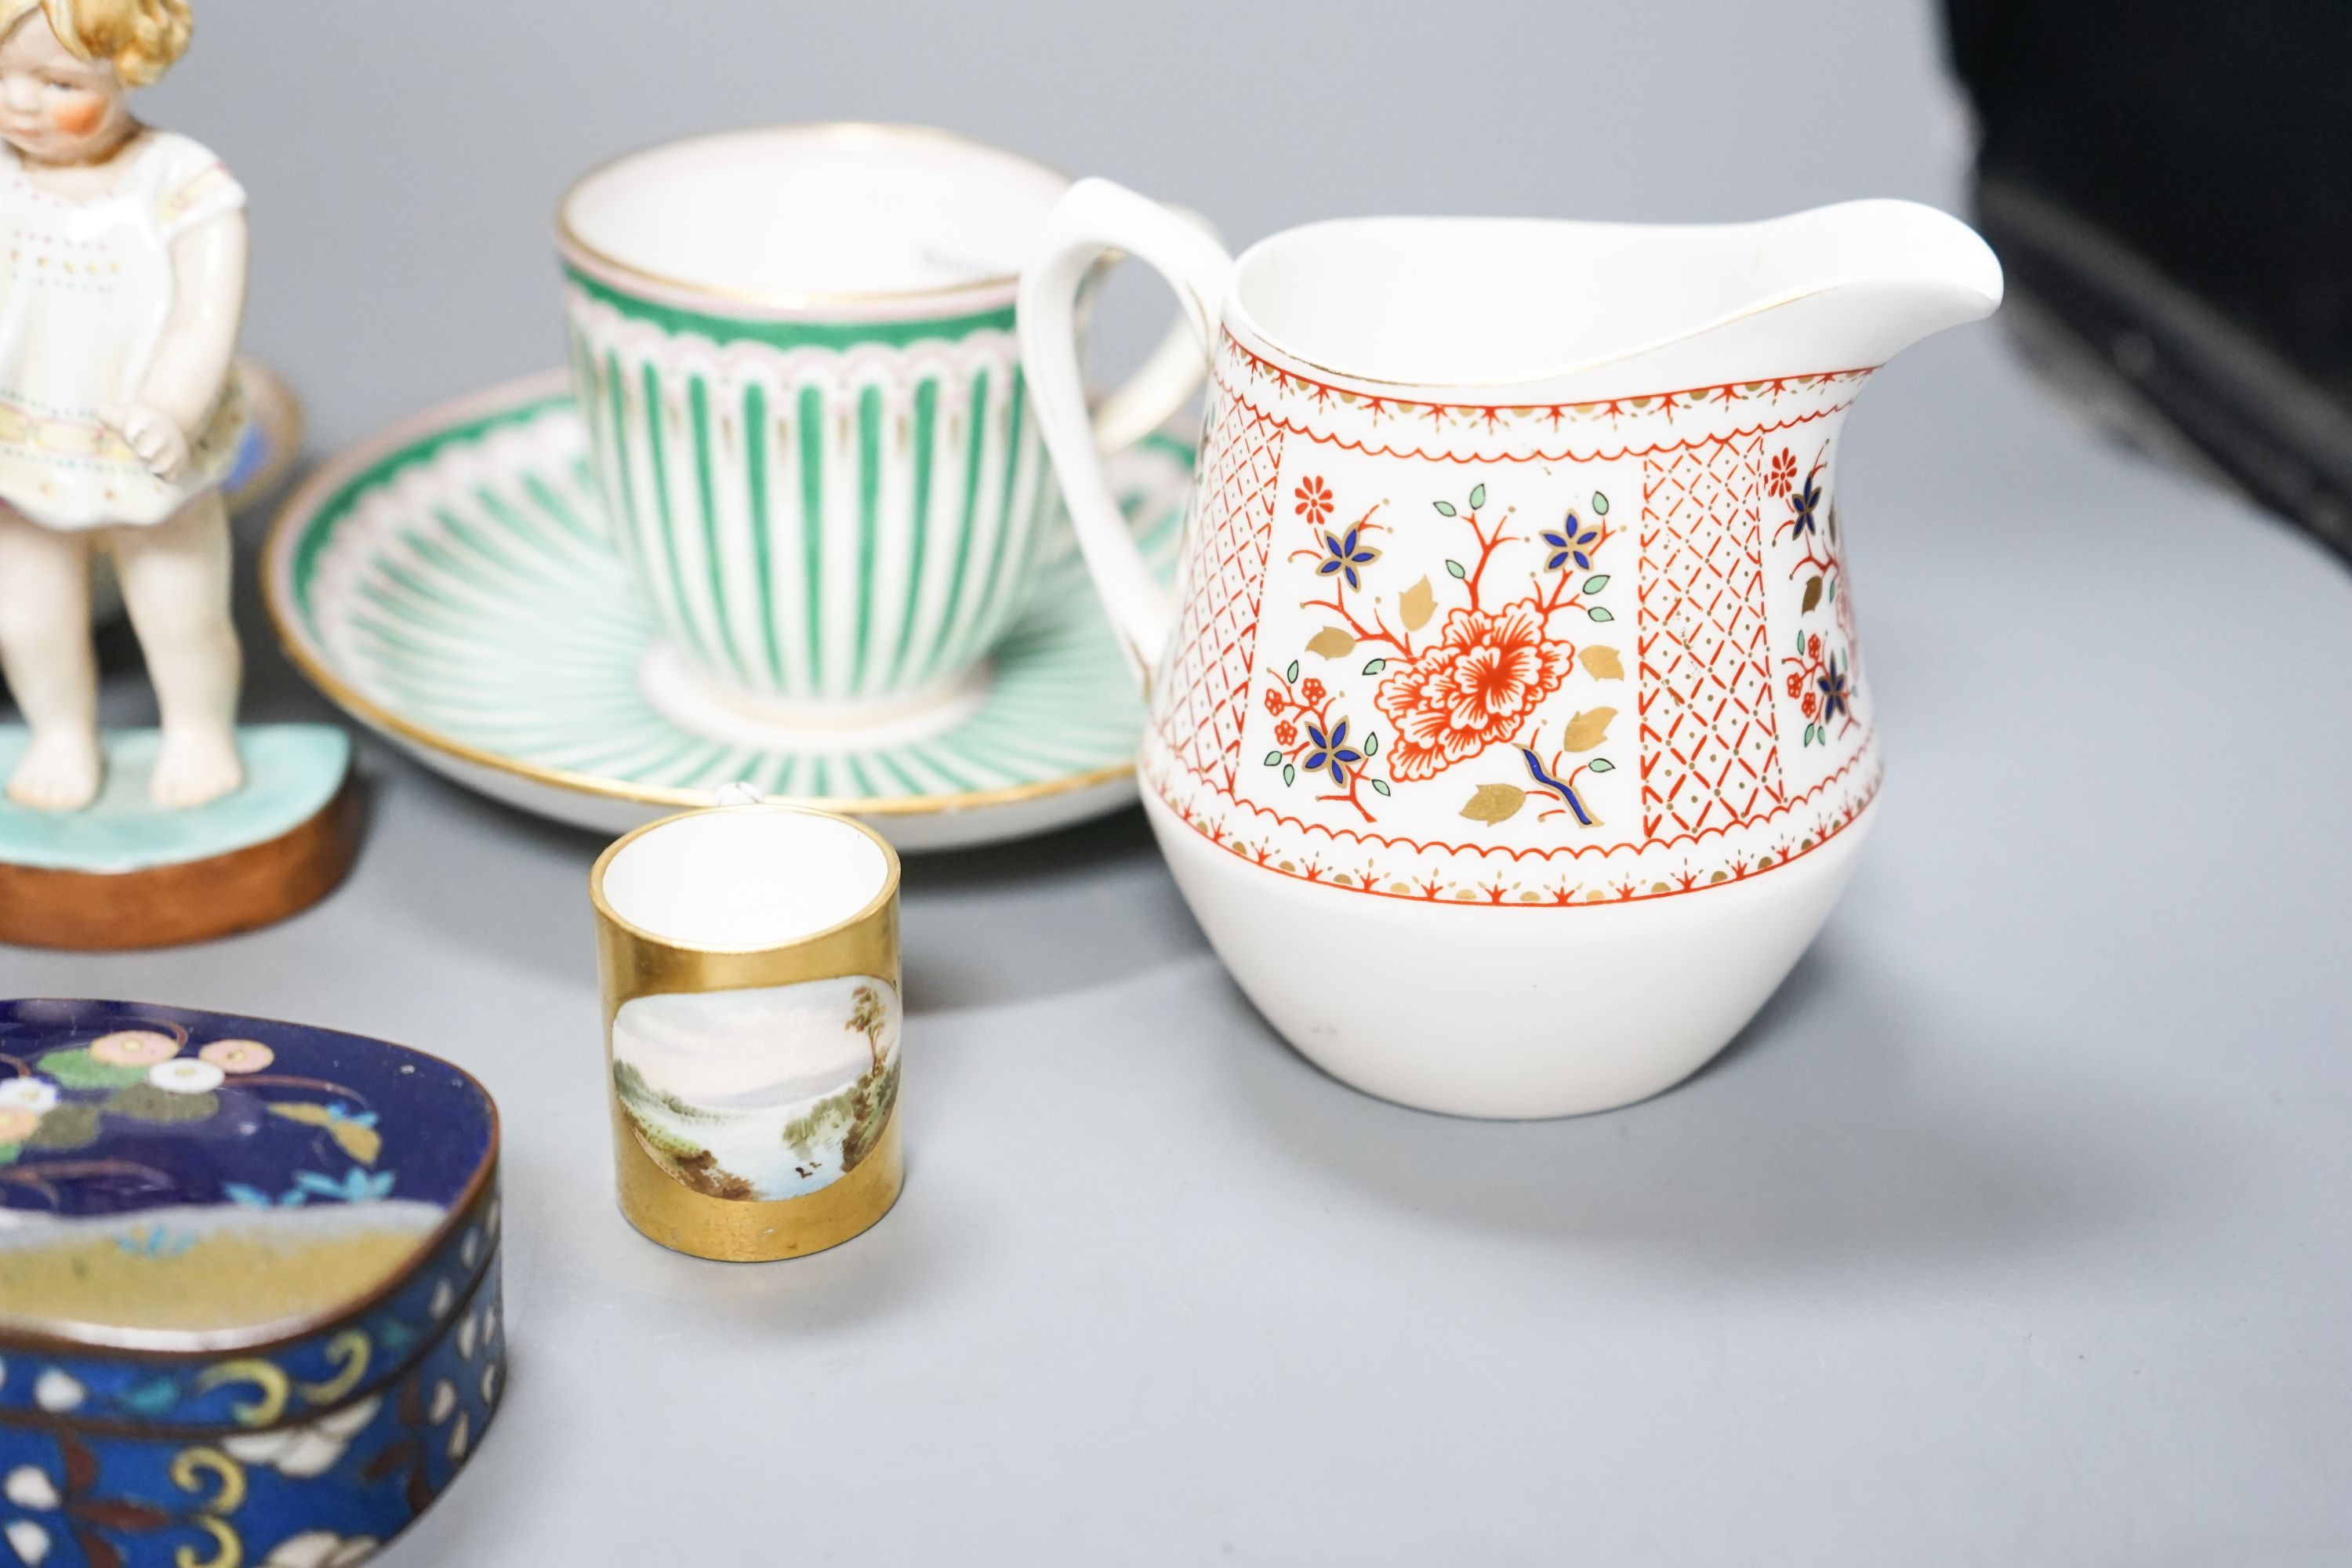 A quantity of mixed 19th and 20th century European ceramics